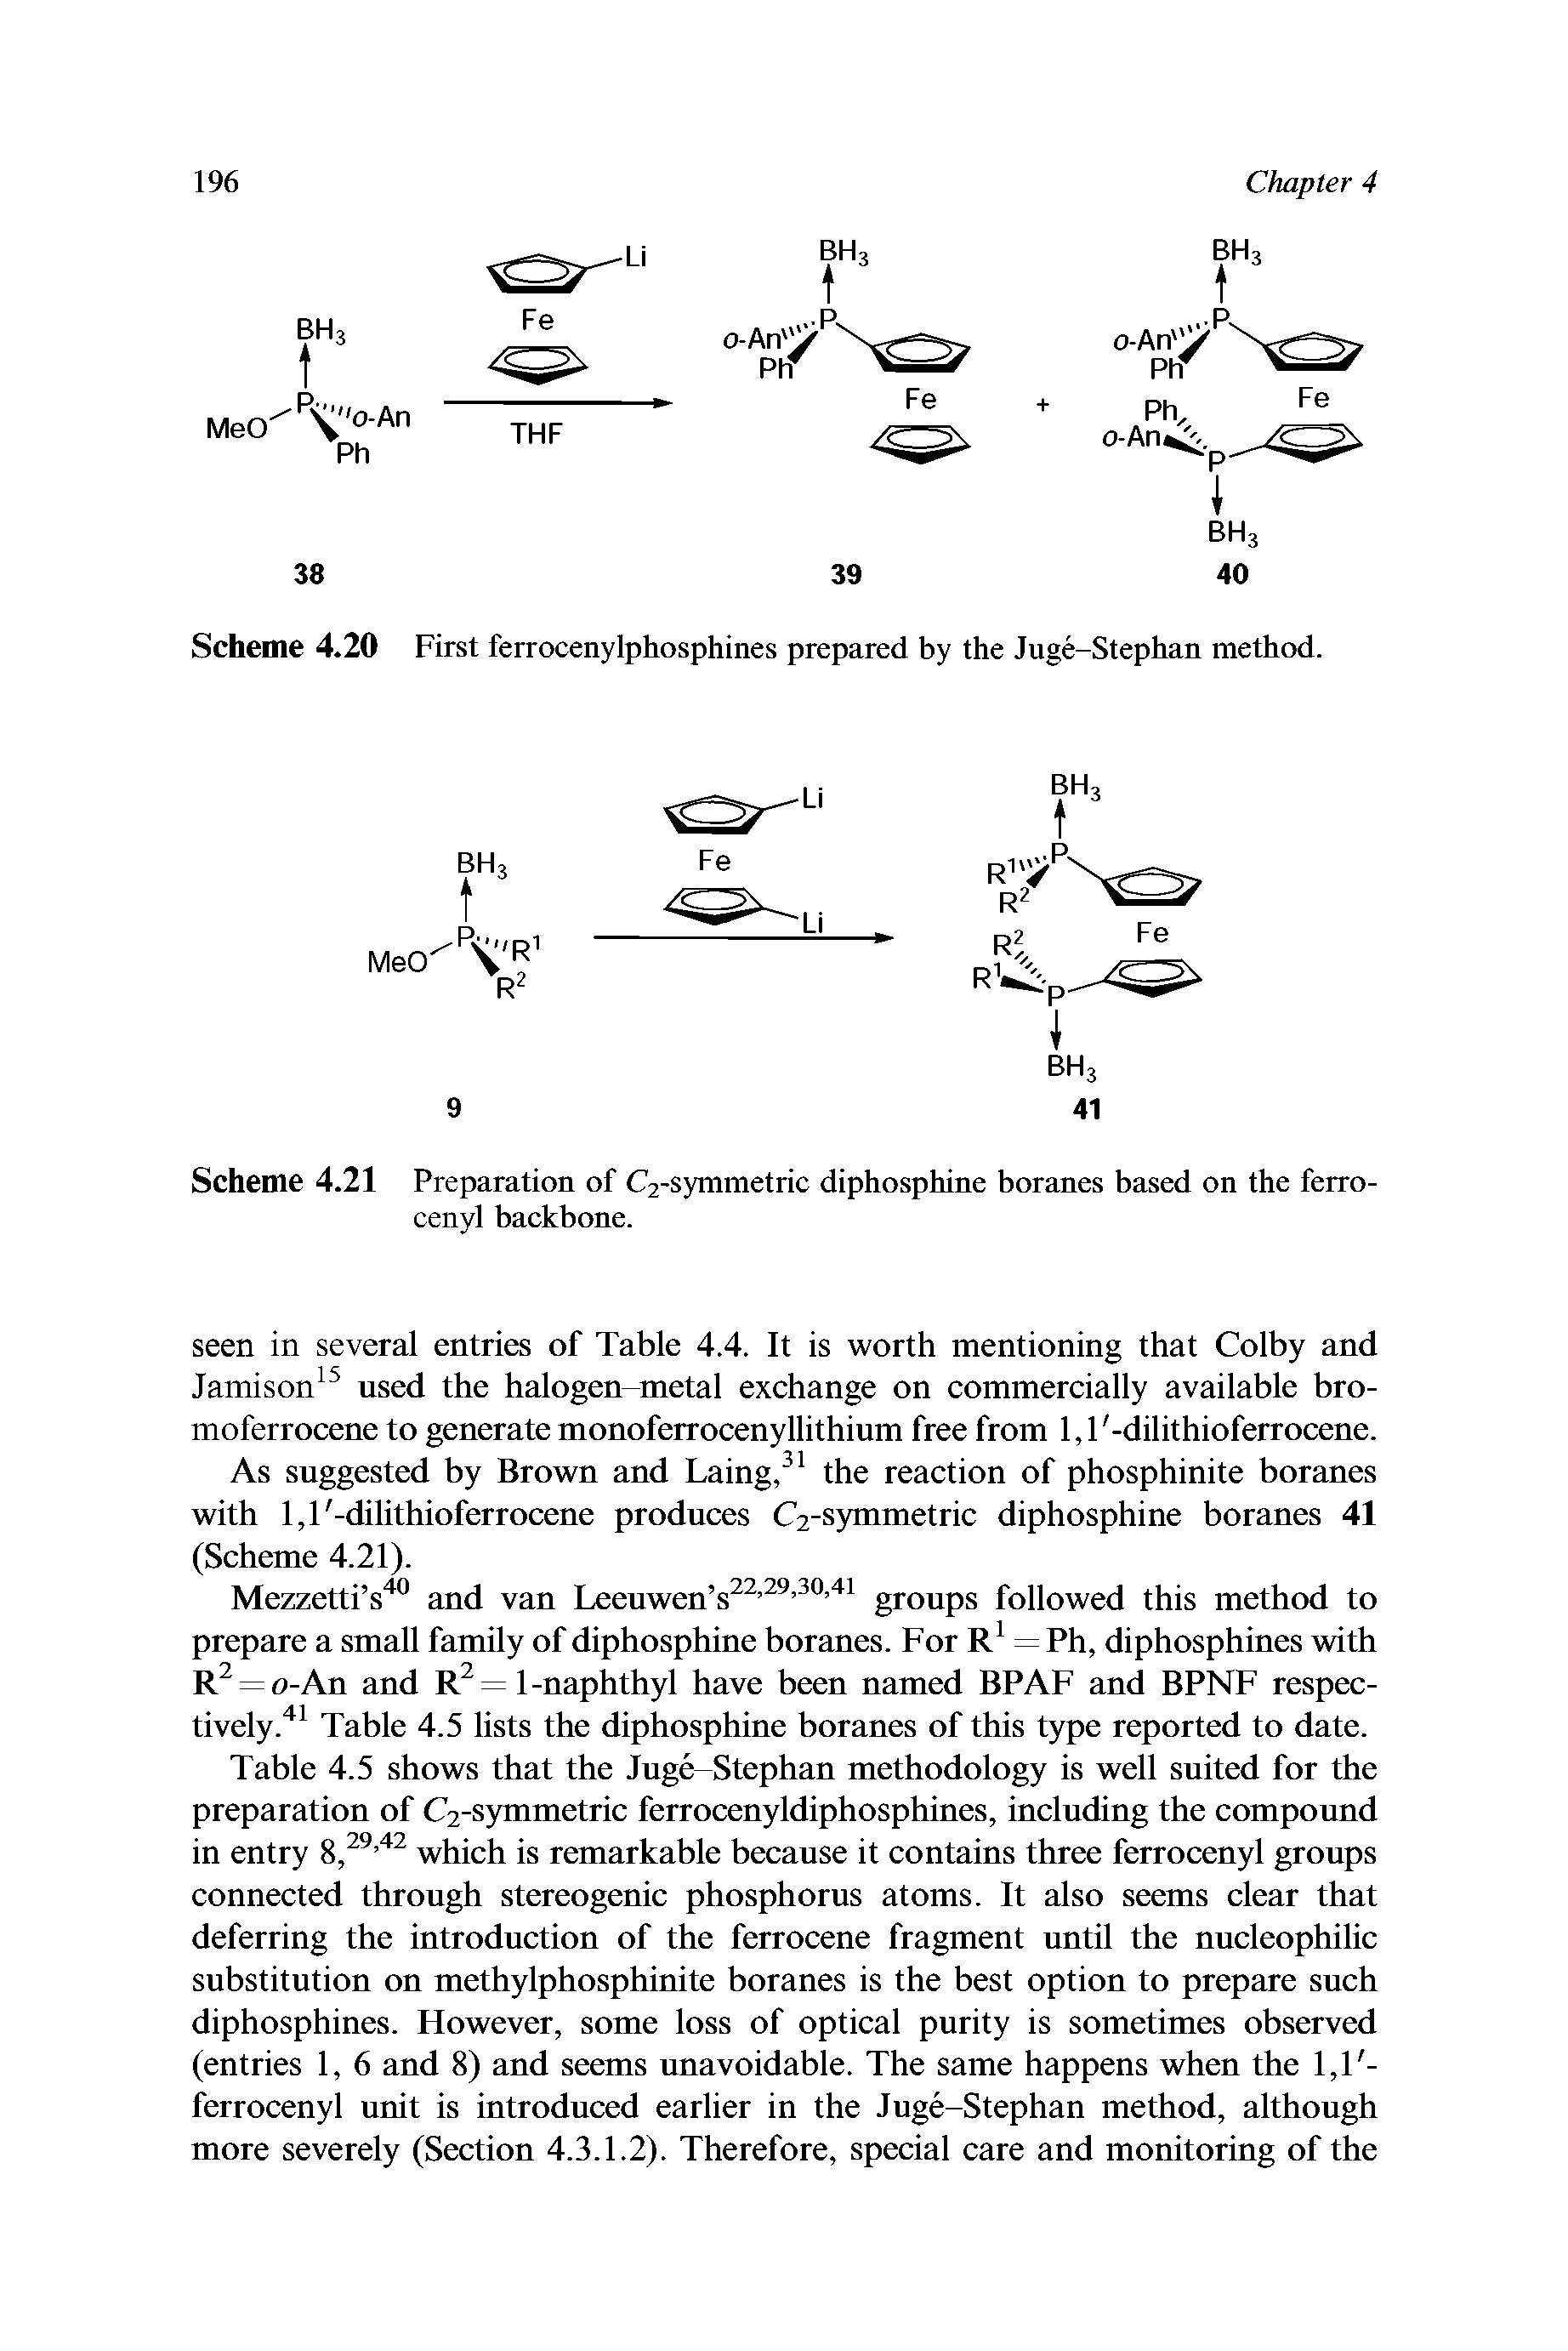 Scheme 4.21 Preparation of C2-symmetric diphosphine boranes based on the ferro-cenyl backbone.